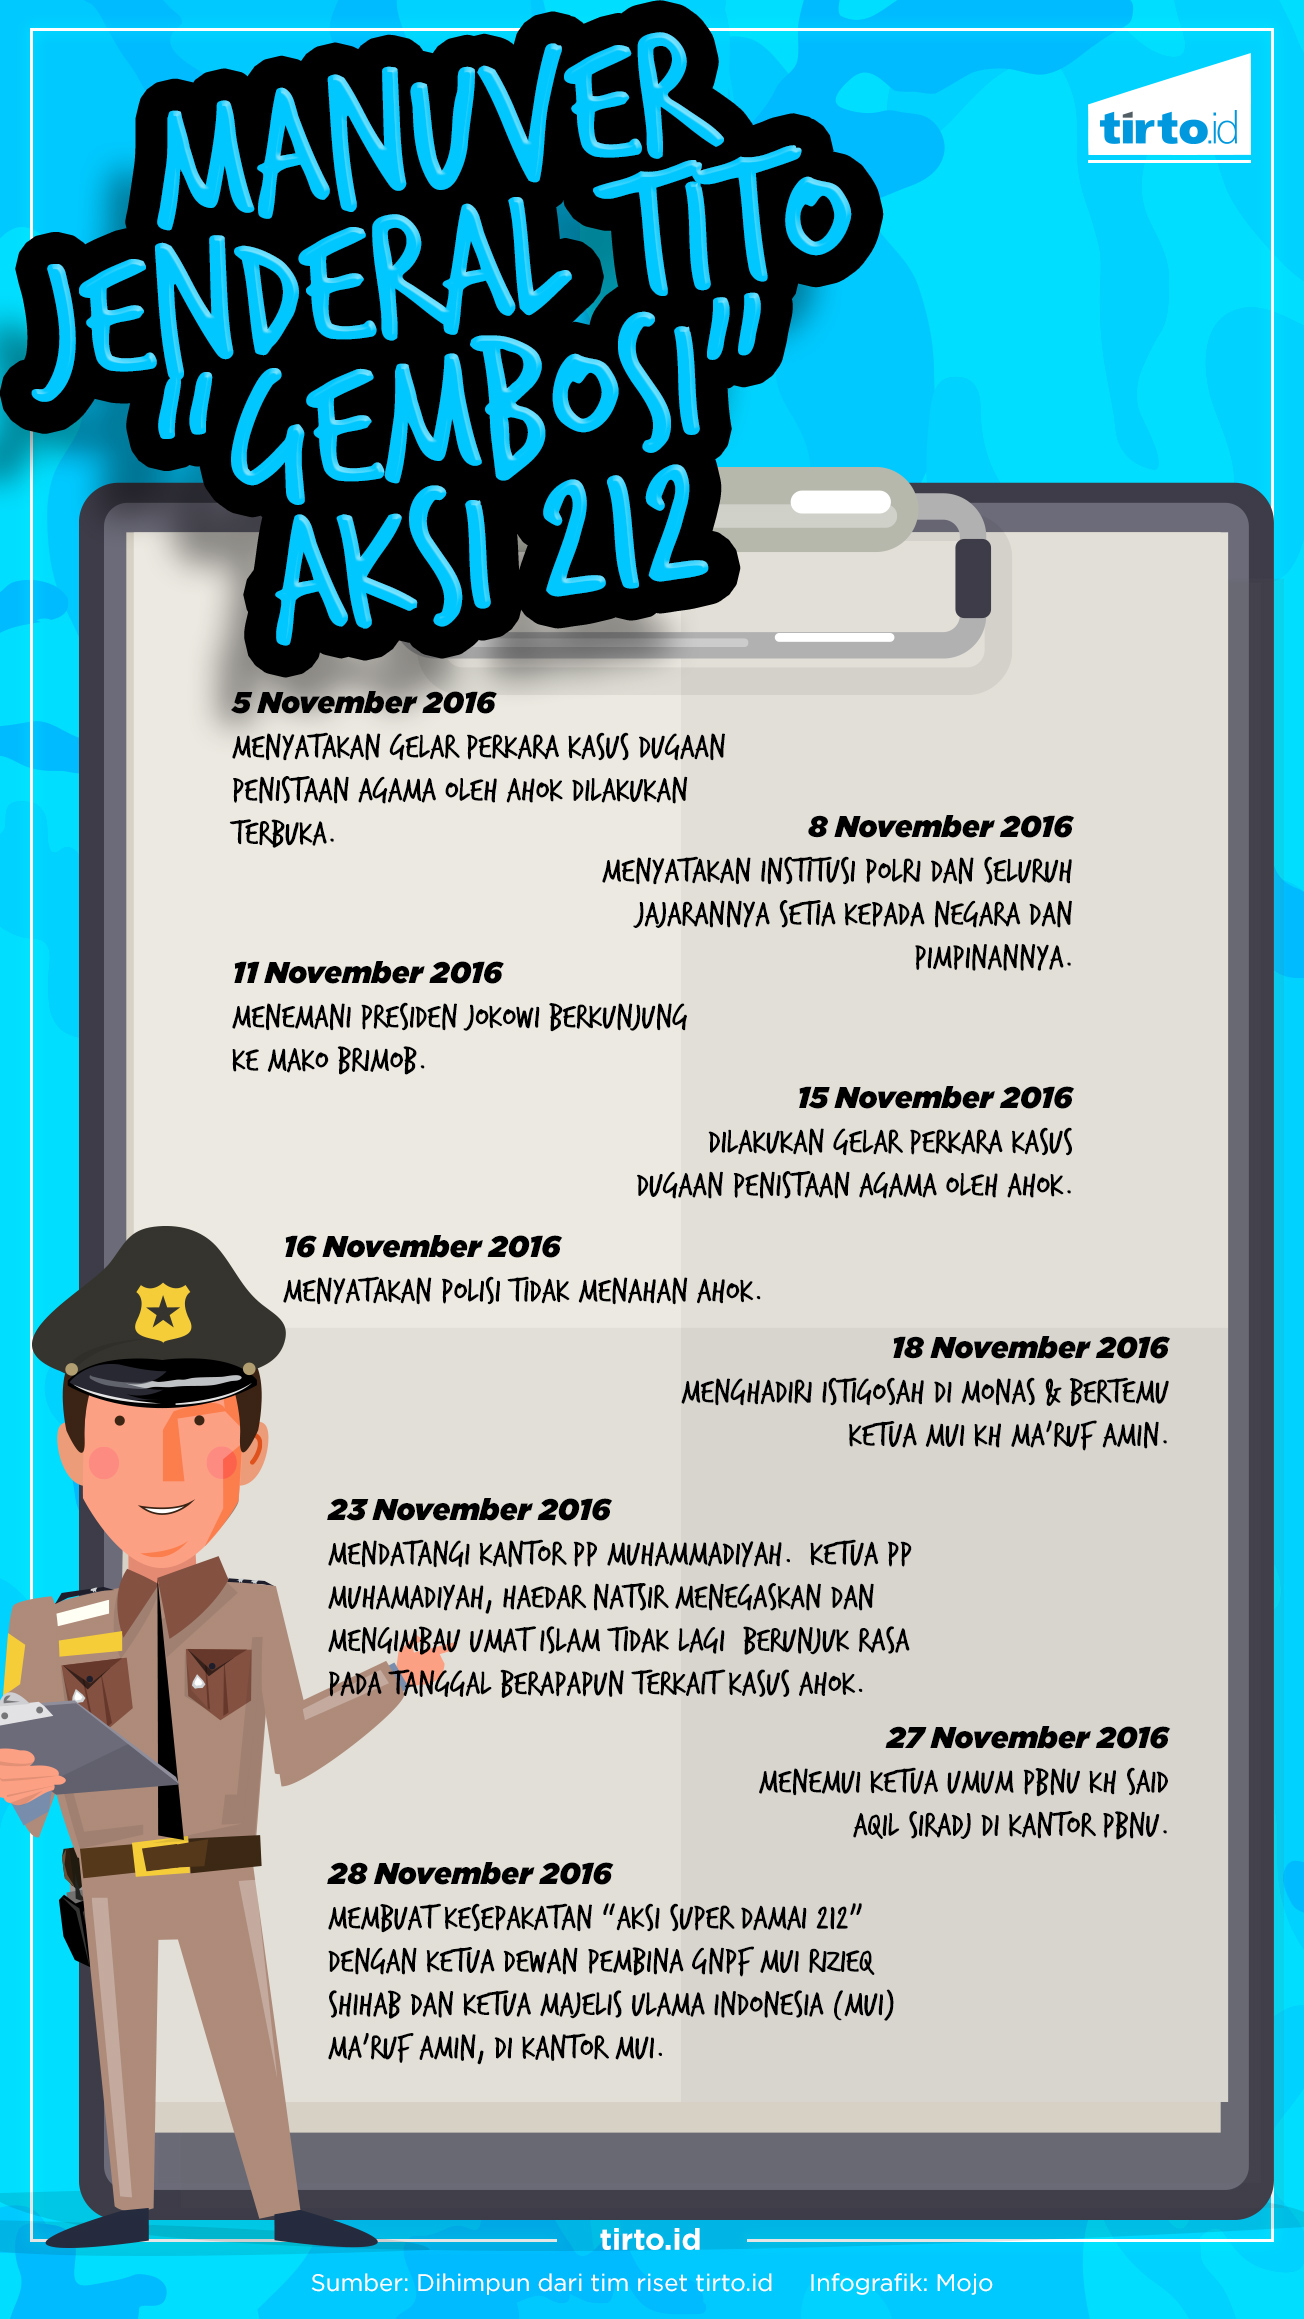 Infografik HL Manuver Jenderal Tito Gembosi Aksi 212